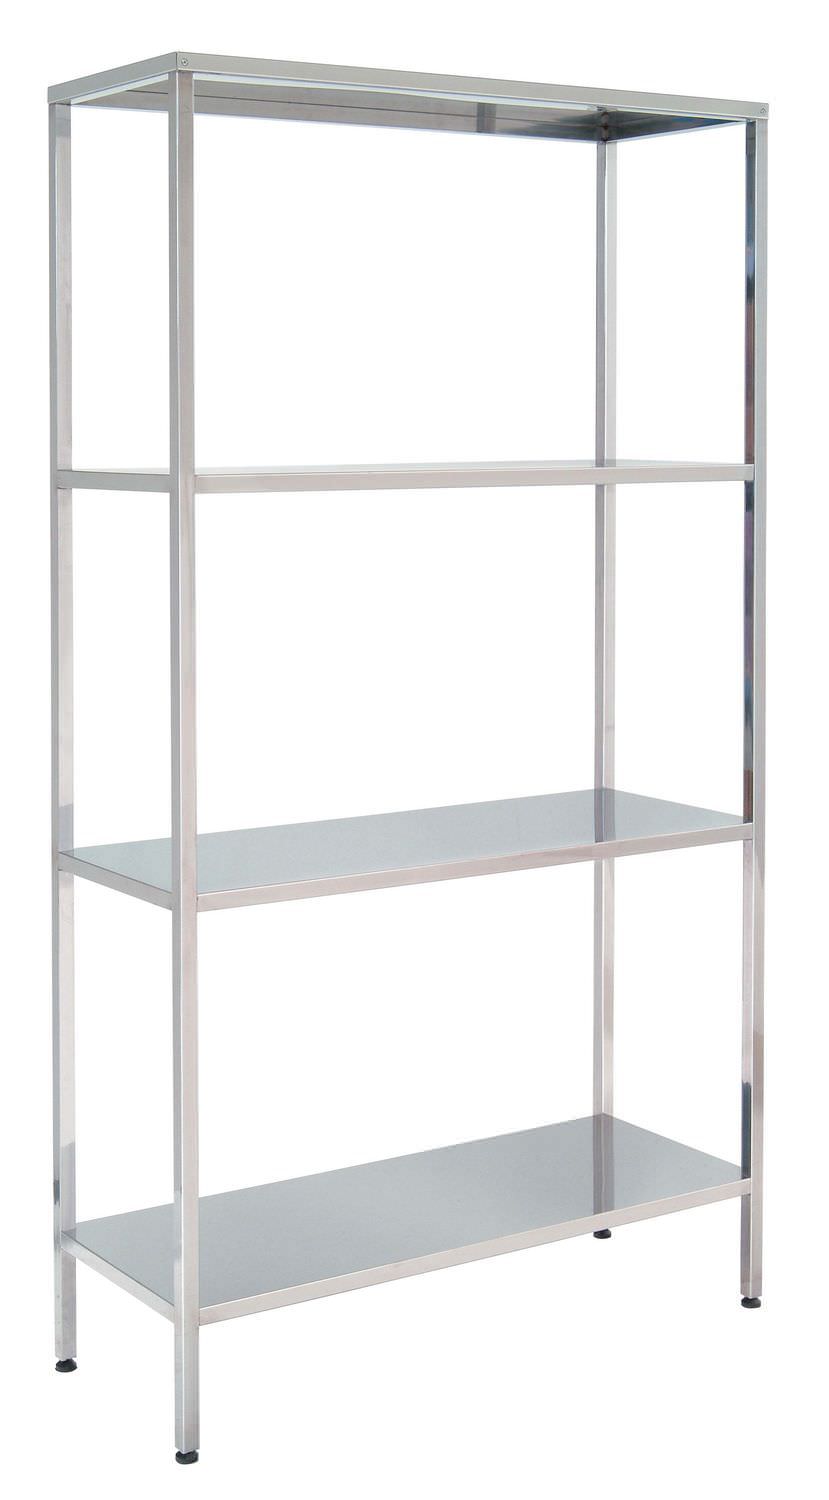 Stainless steel shelving unit / 4-shelf 26000 Inmoclinc